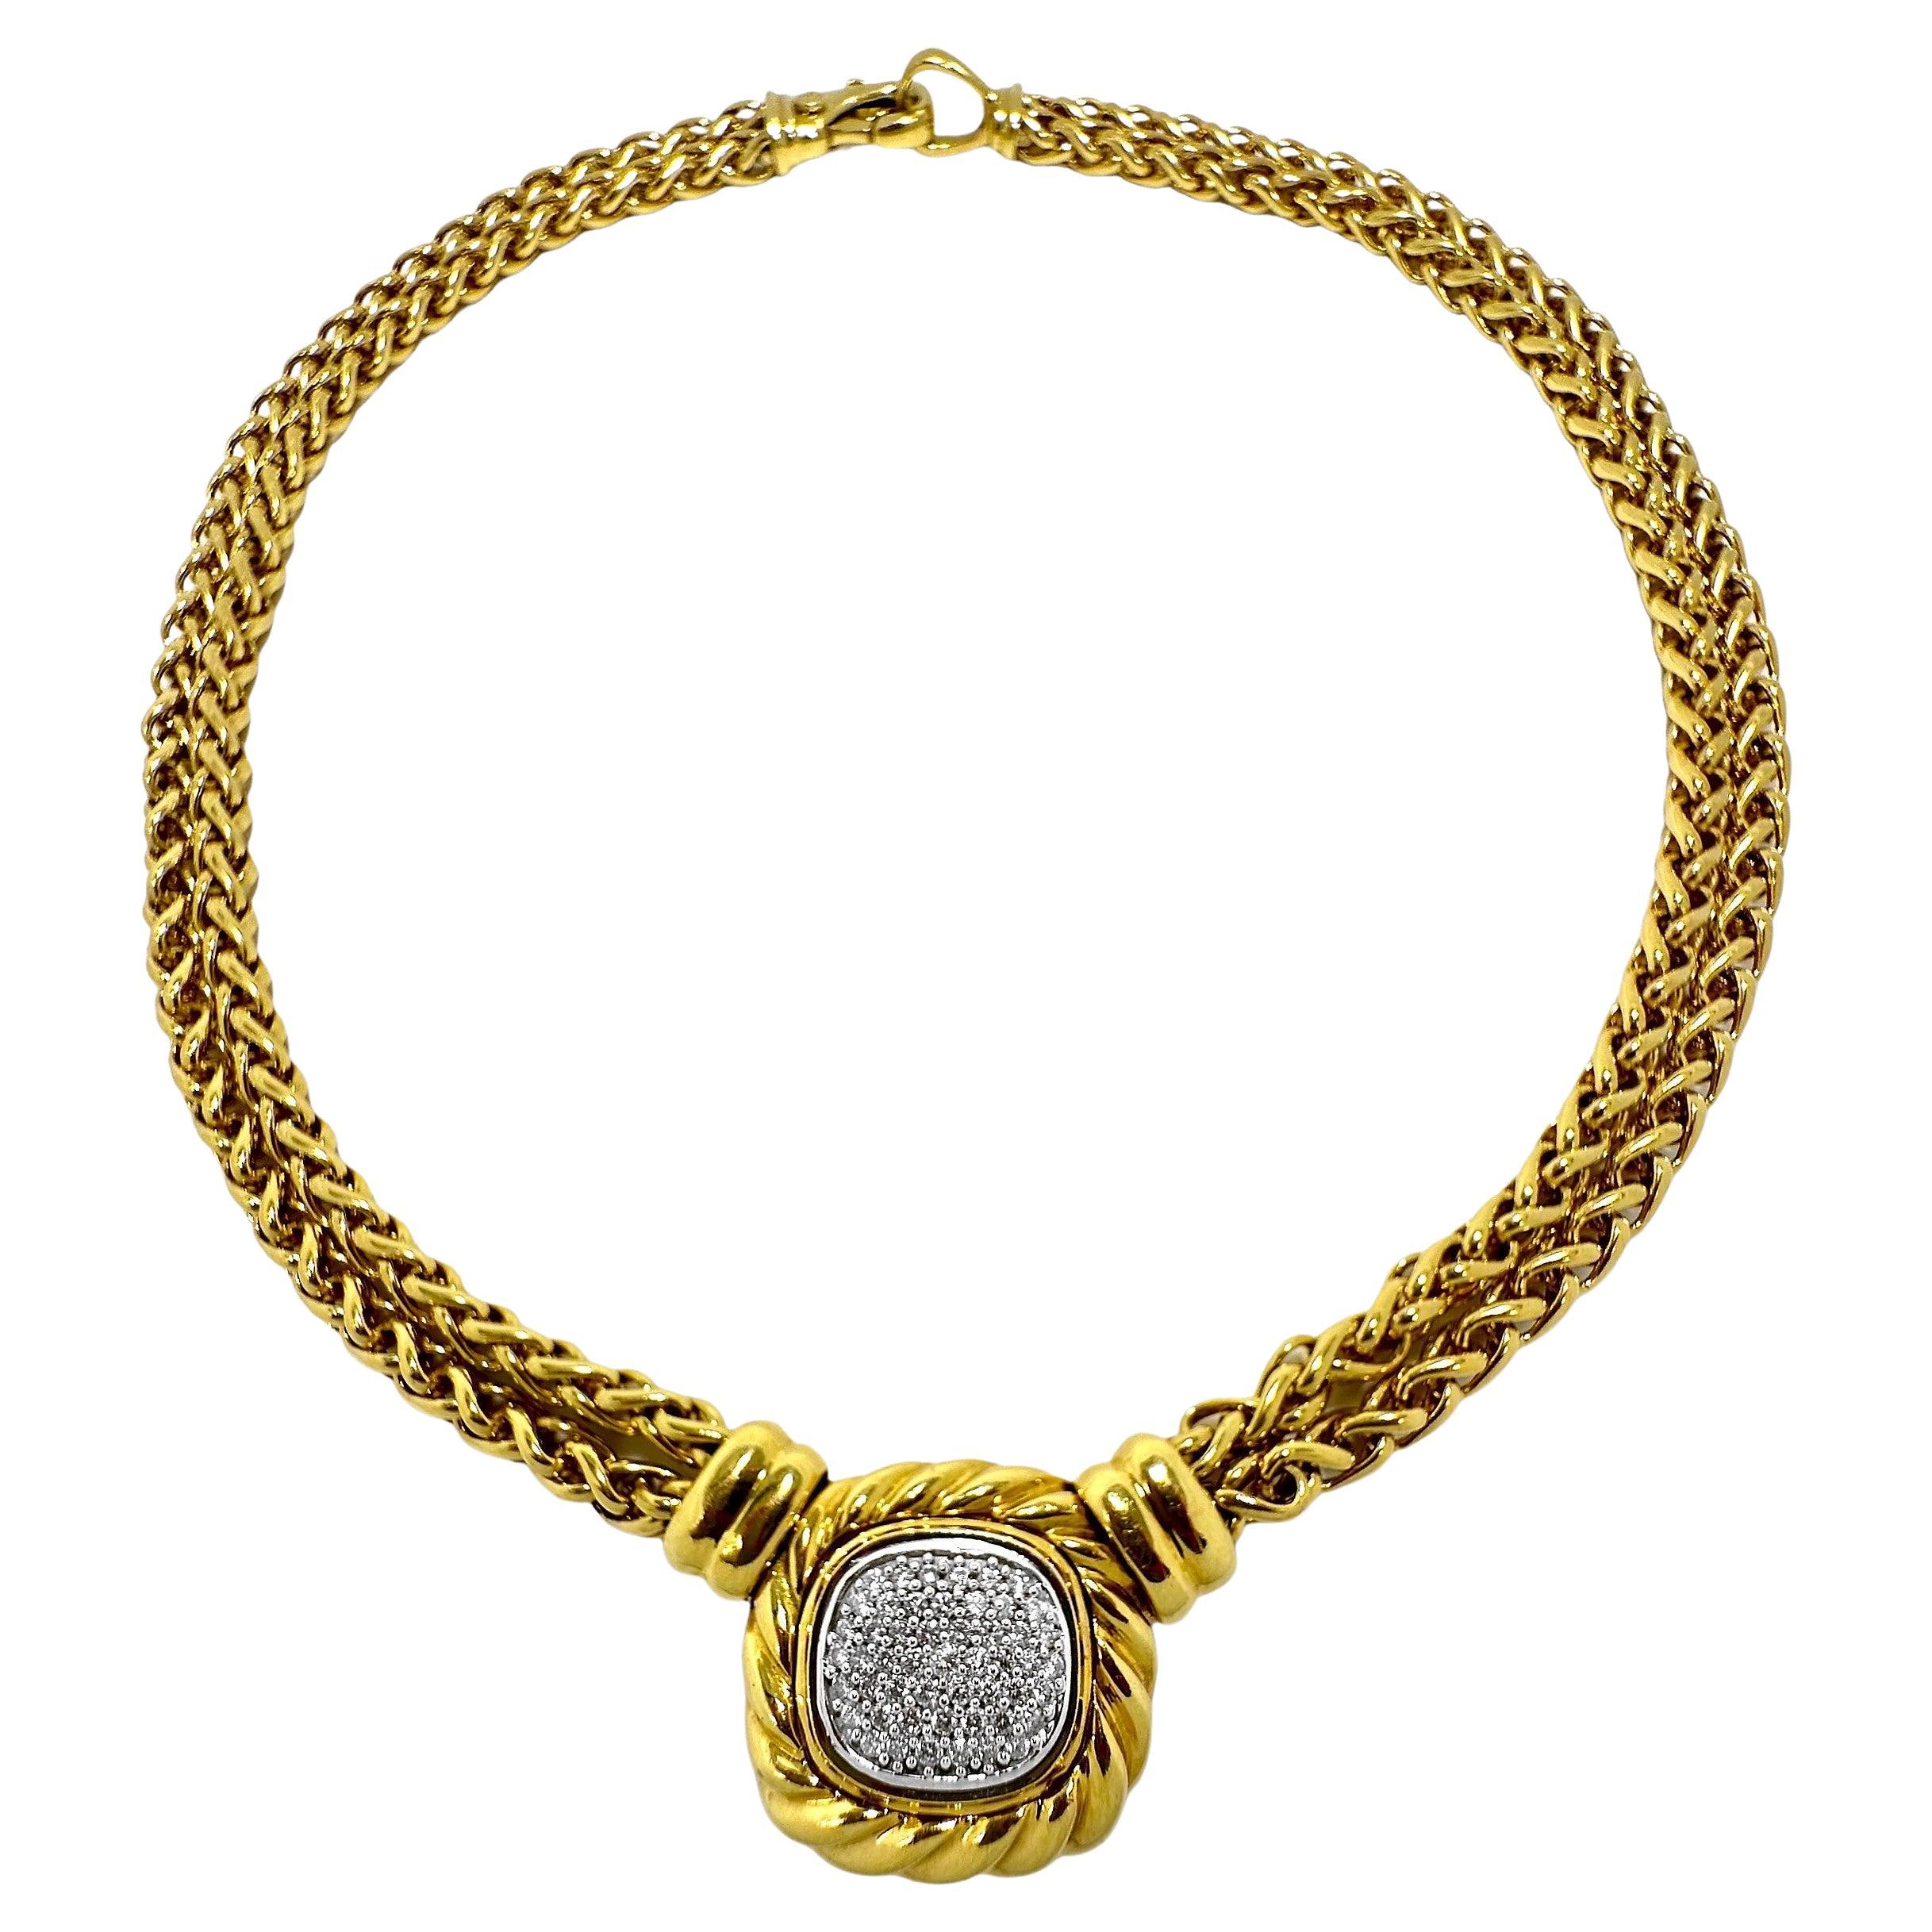 David Yurman 18K Gold and Diamond Choker Necklace with Pave Set Diamond Center For Sale